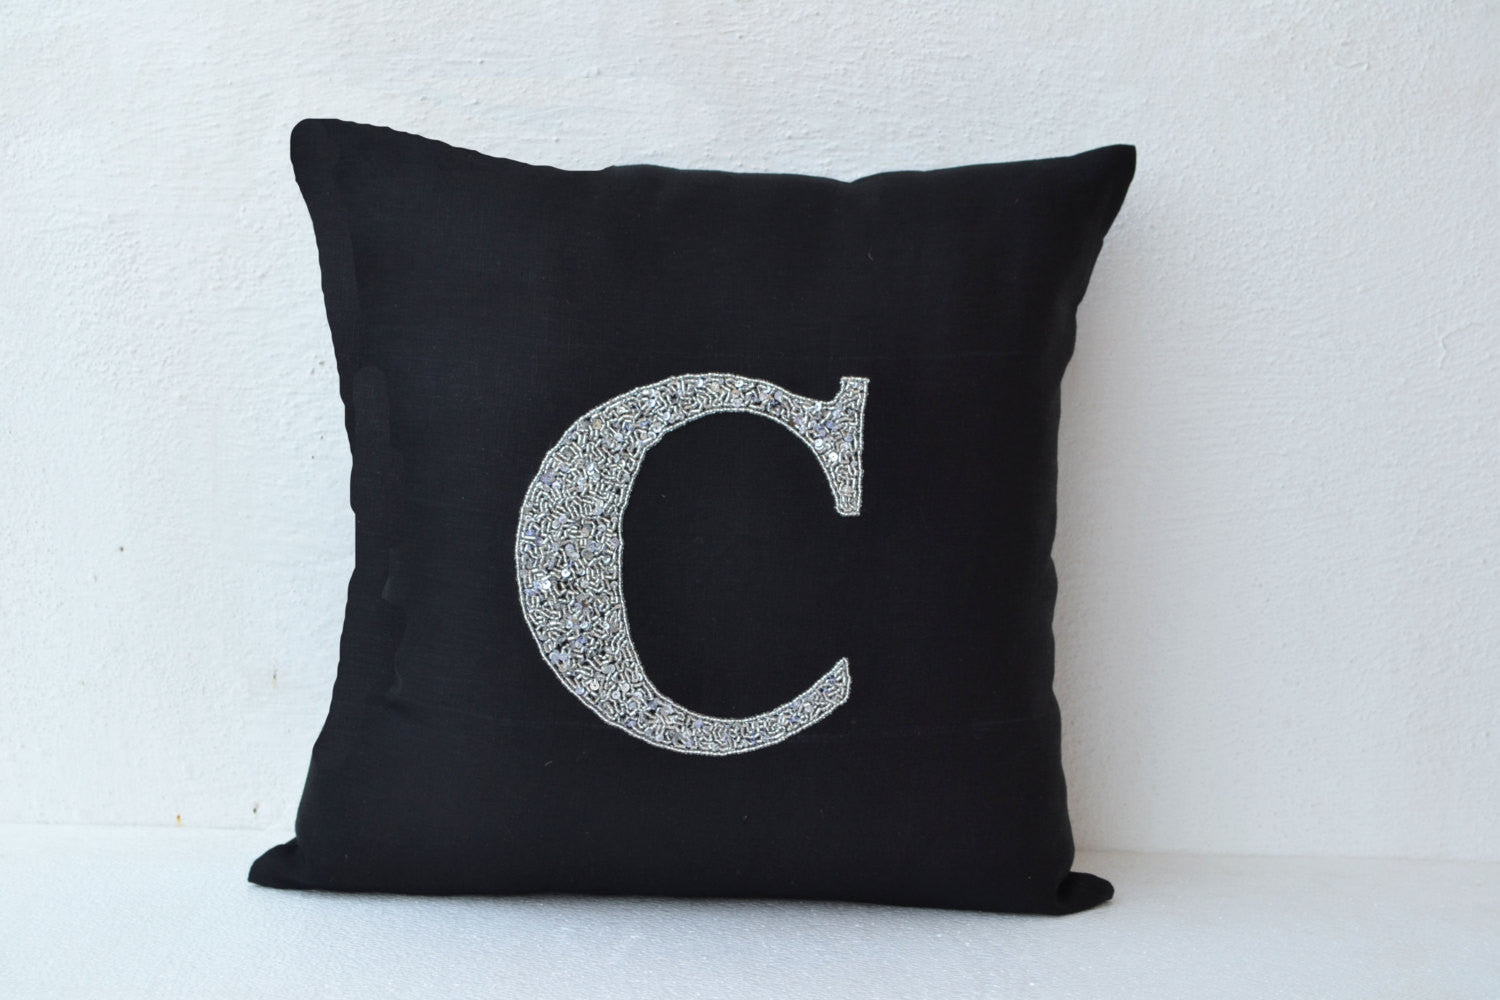 Handmade linen monogrammed throw pillow with metallic silver sequin